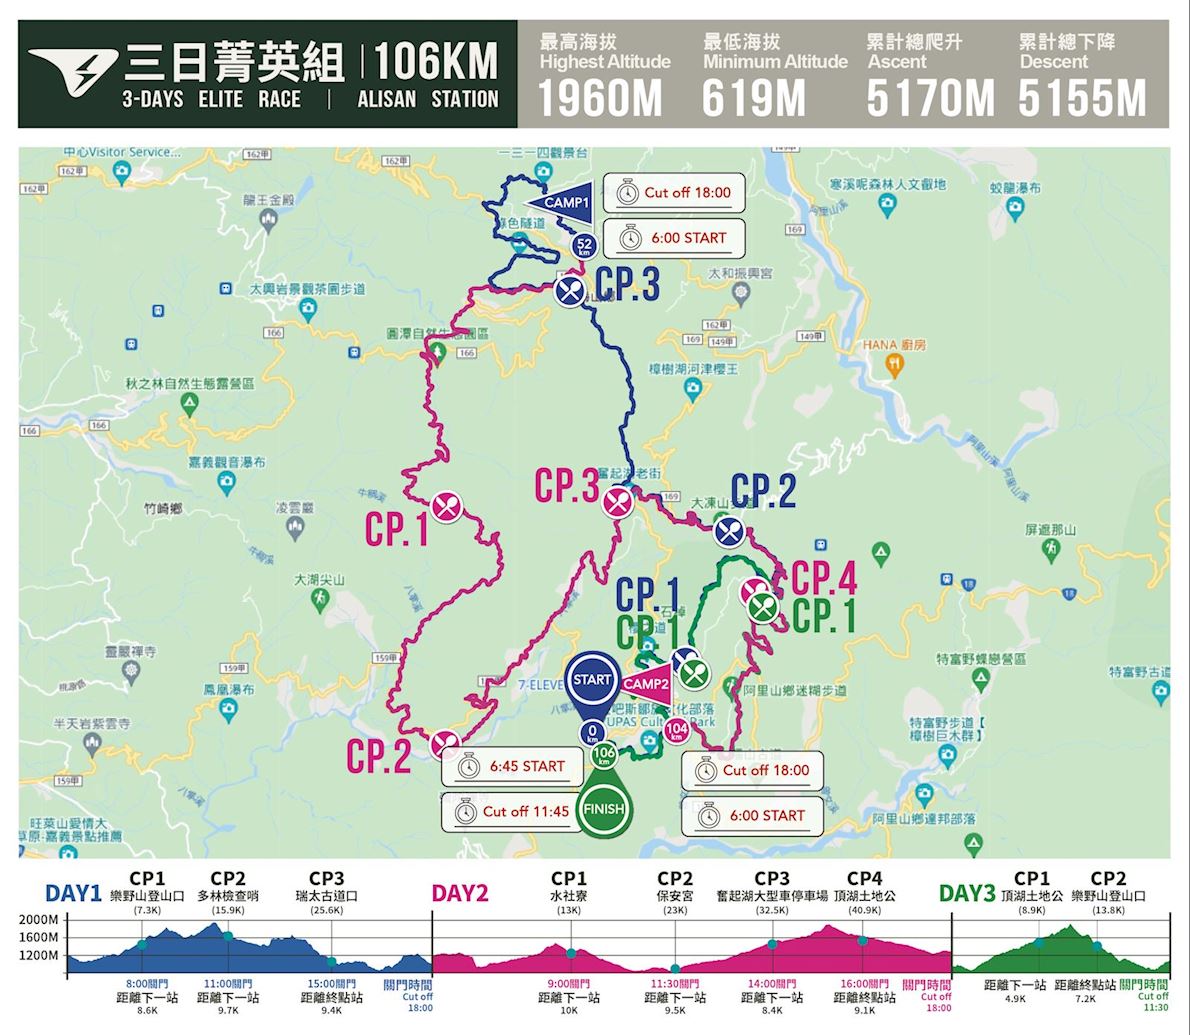 SUPERACE ULTRA MARATHON – Alishan Station, 106Km Stage race & 21Km Trail race Route Map